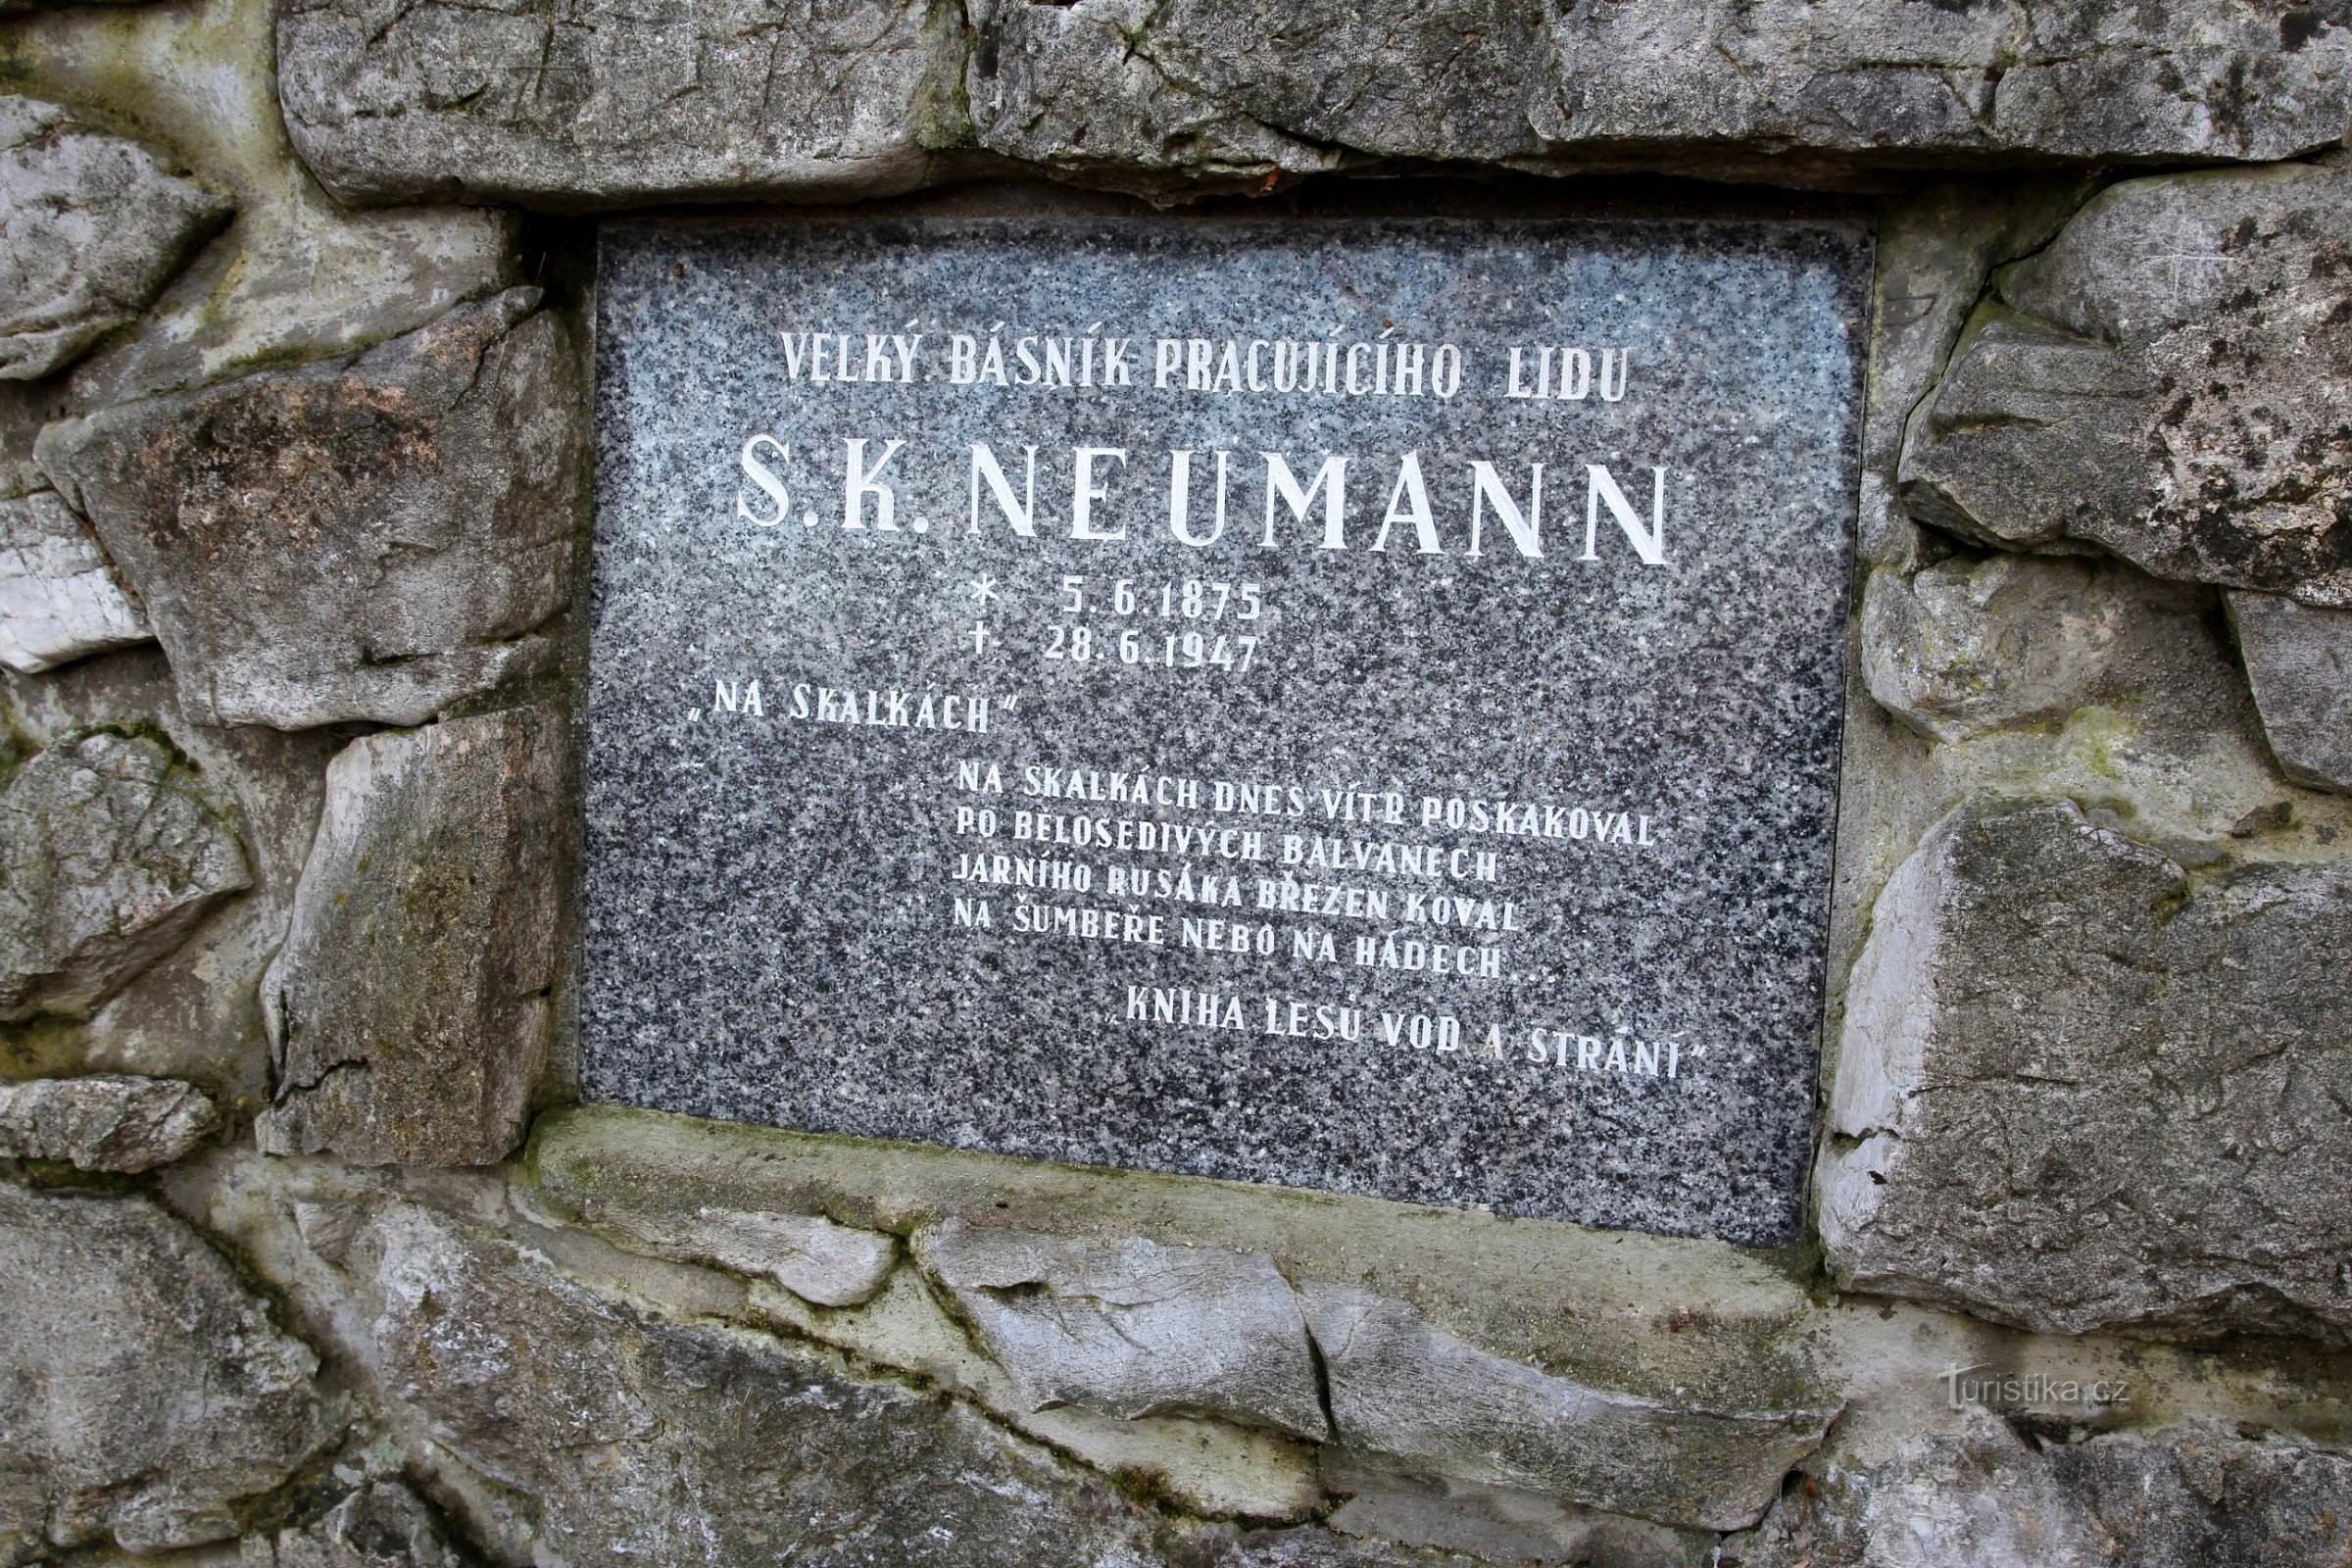 SK Neumannin muistomerkki